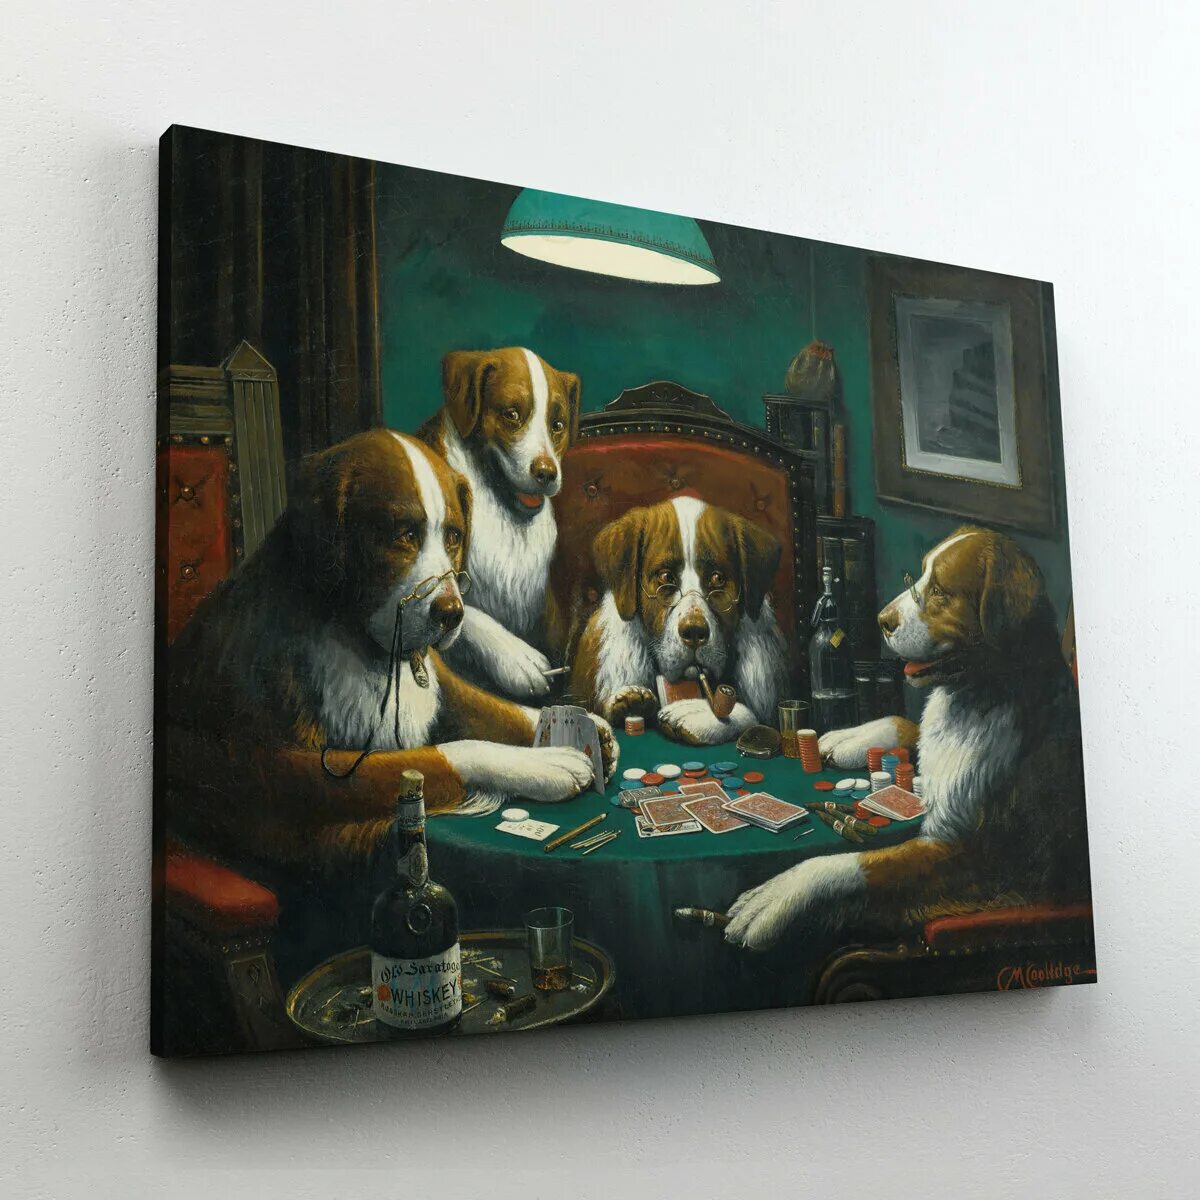 Собаки играют в покер кулидж. Кассиус Кулидж собаки. Кассиус Кулидж собаки картины. Кулидж собаки играющие в Покер. Кассиус Кулидж собаки играющие в Покер.